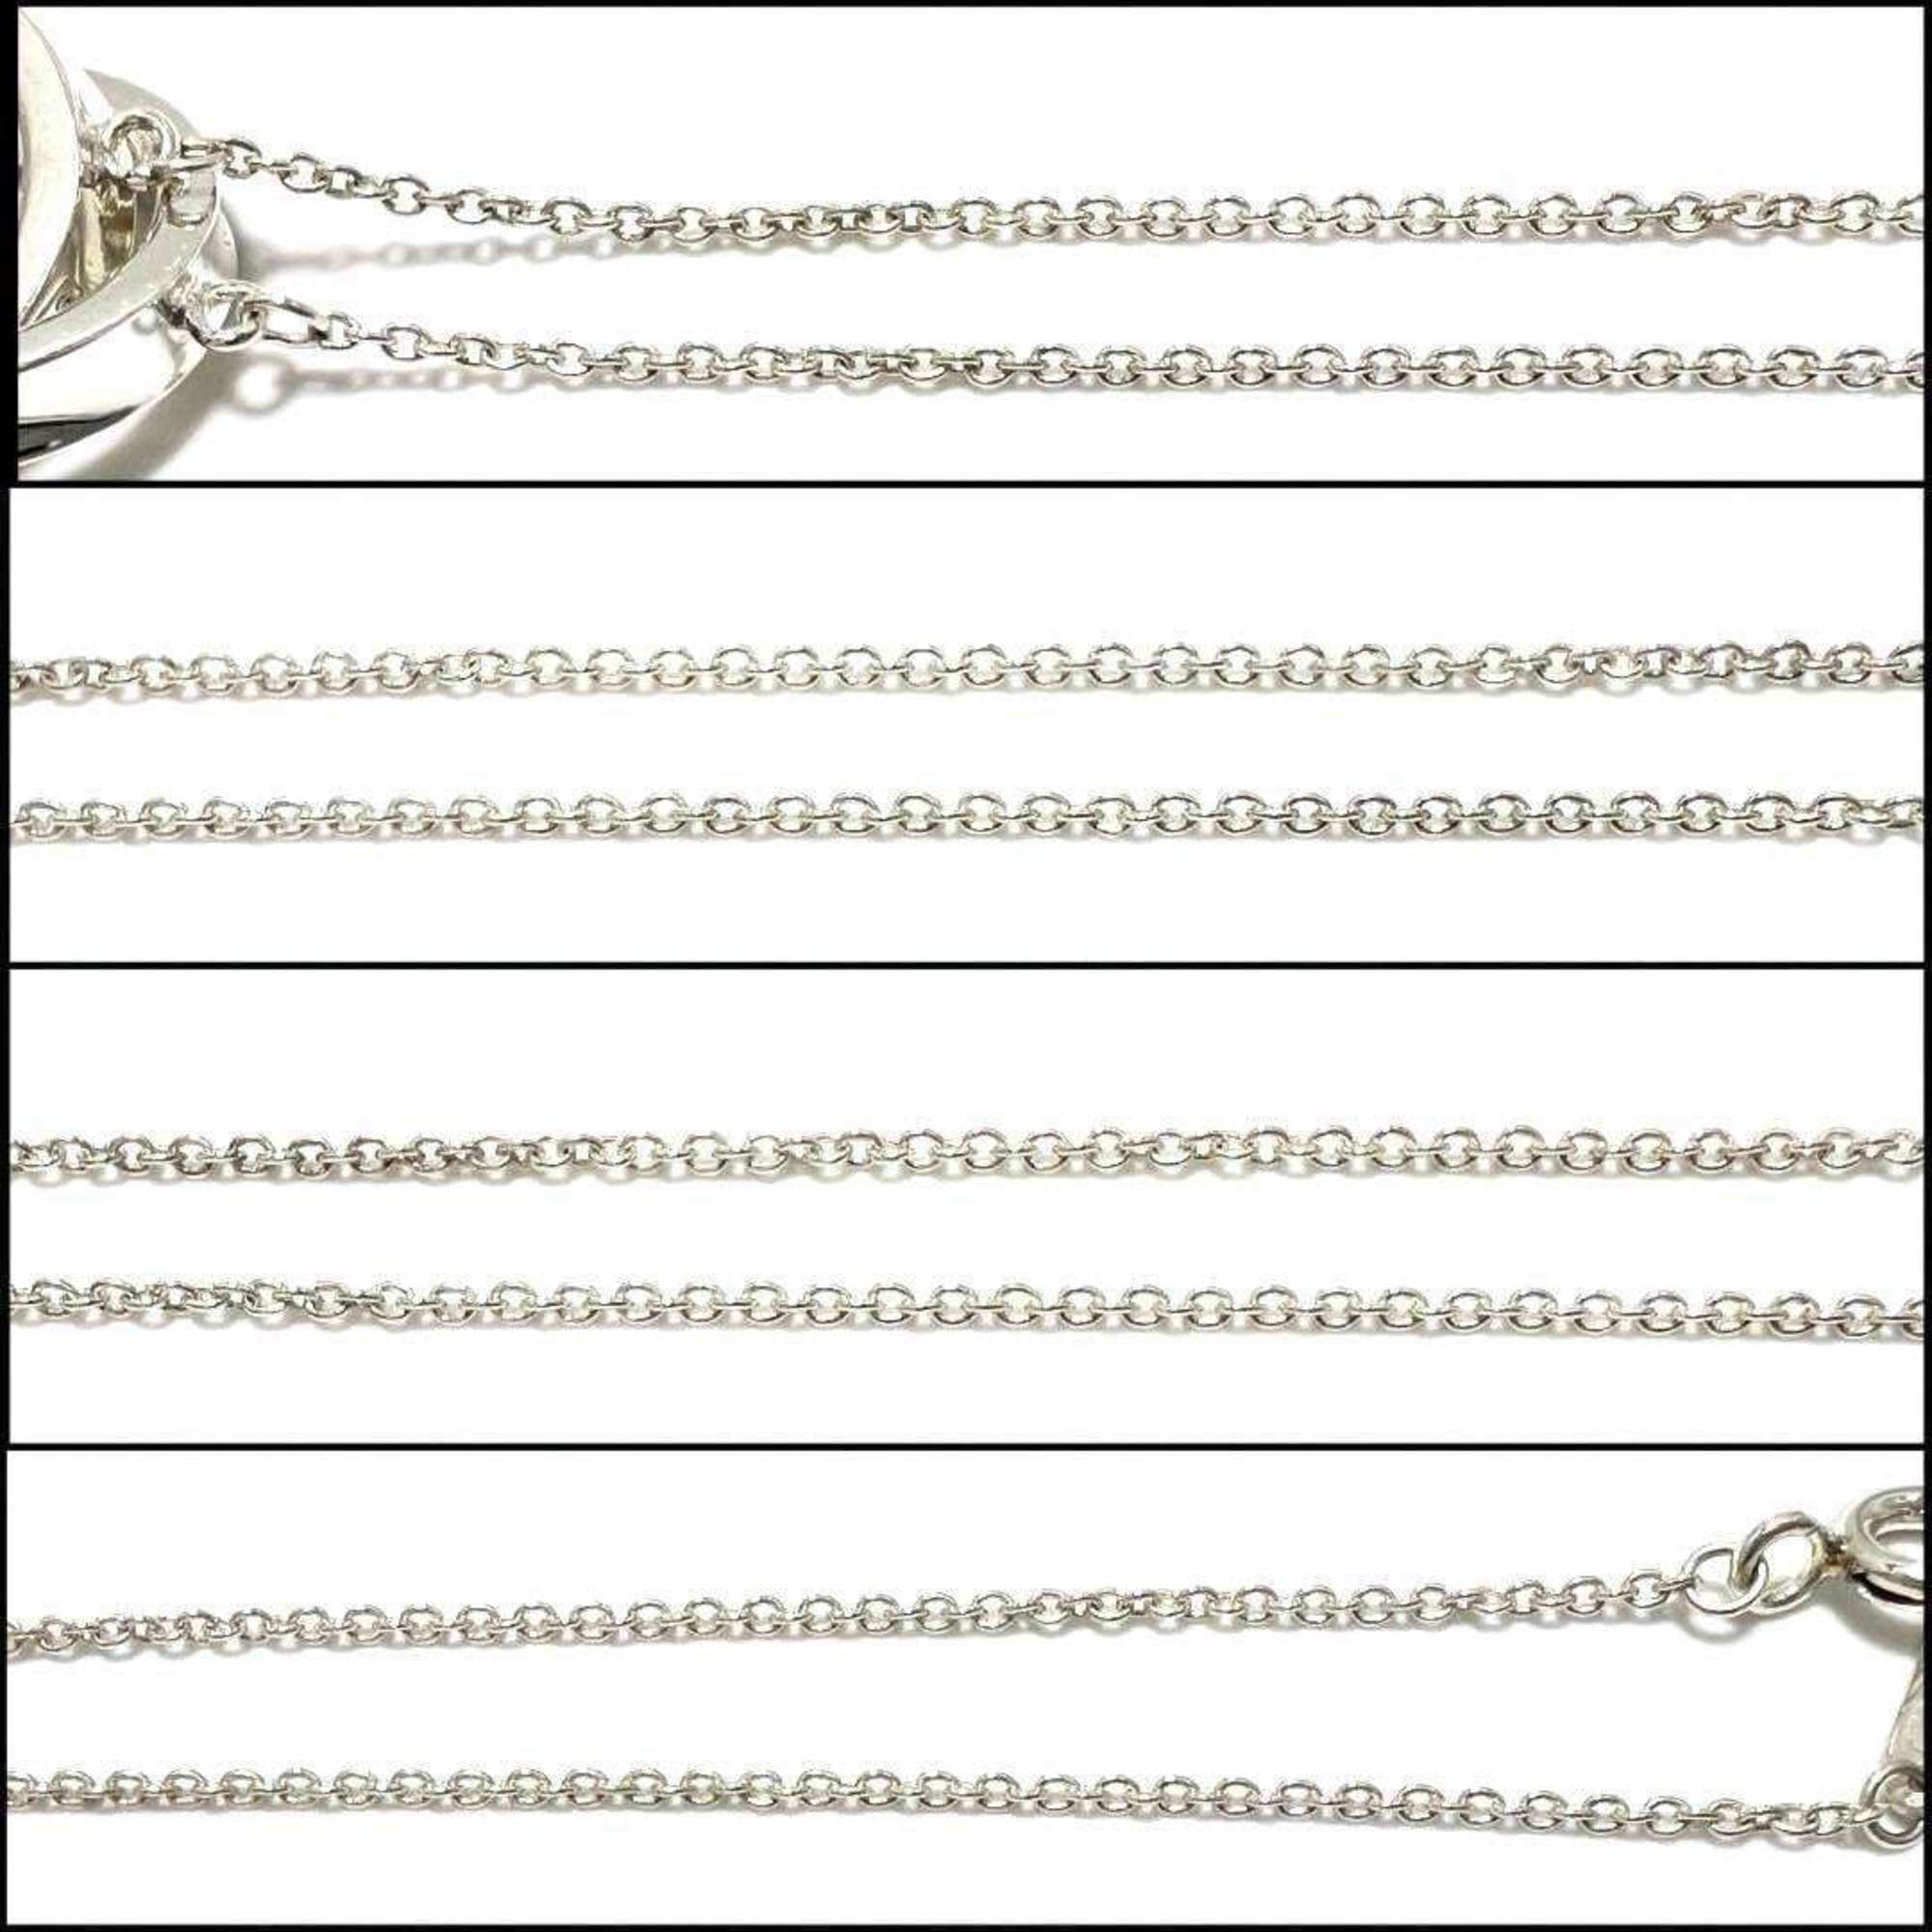 Tiffany Women's Interlocking Circle Necklace in 925 Silver